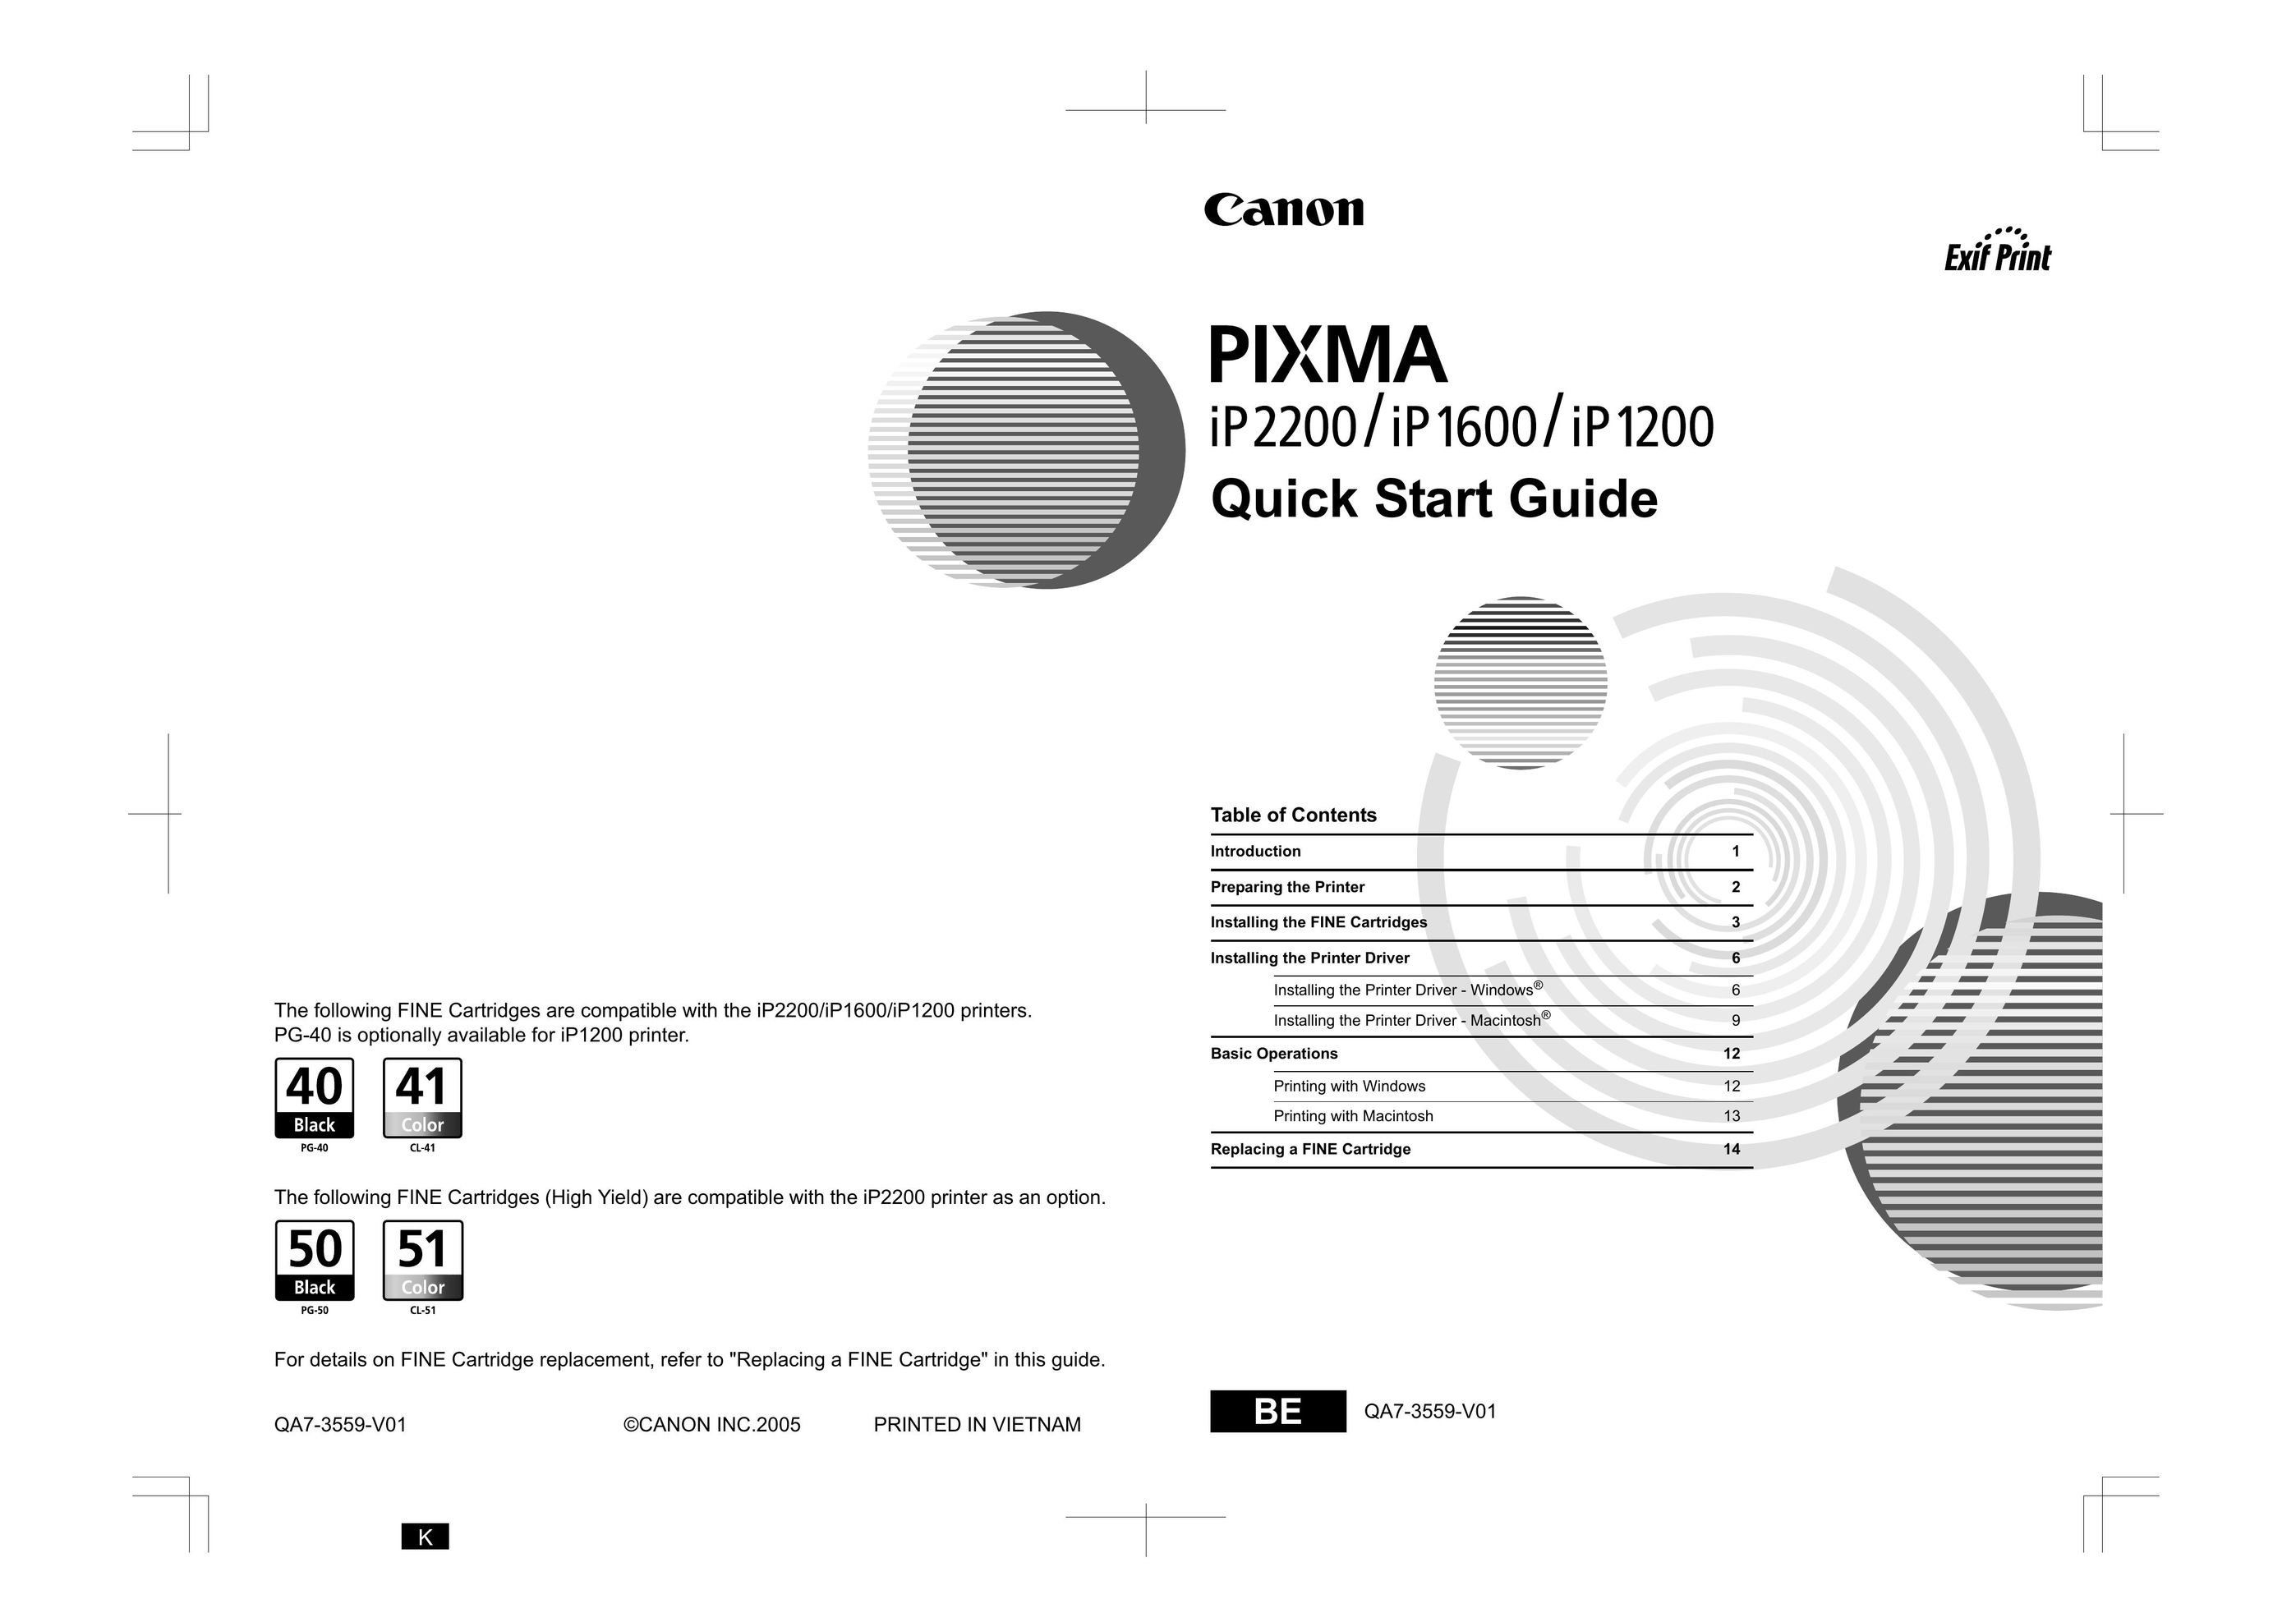 Sony iP1200 Printer User Manual